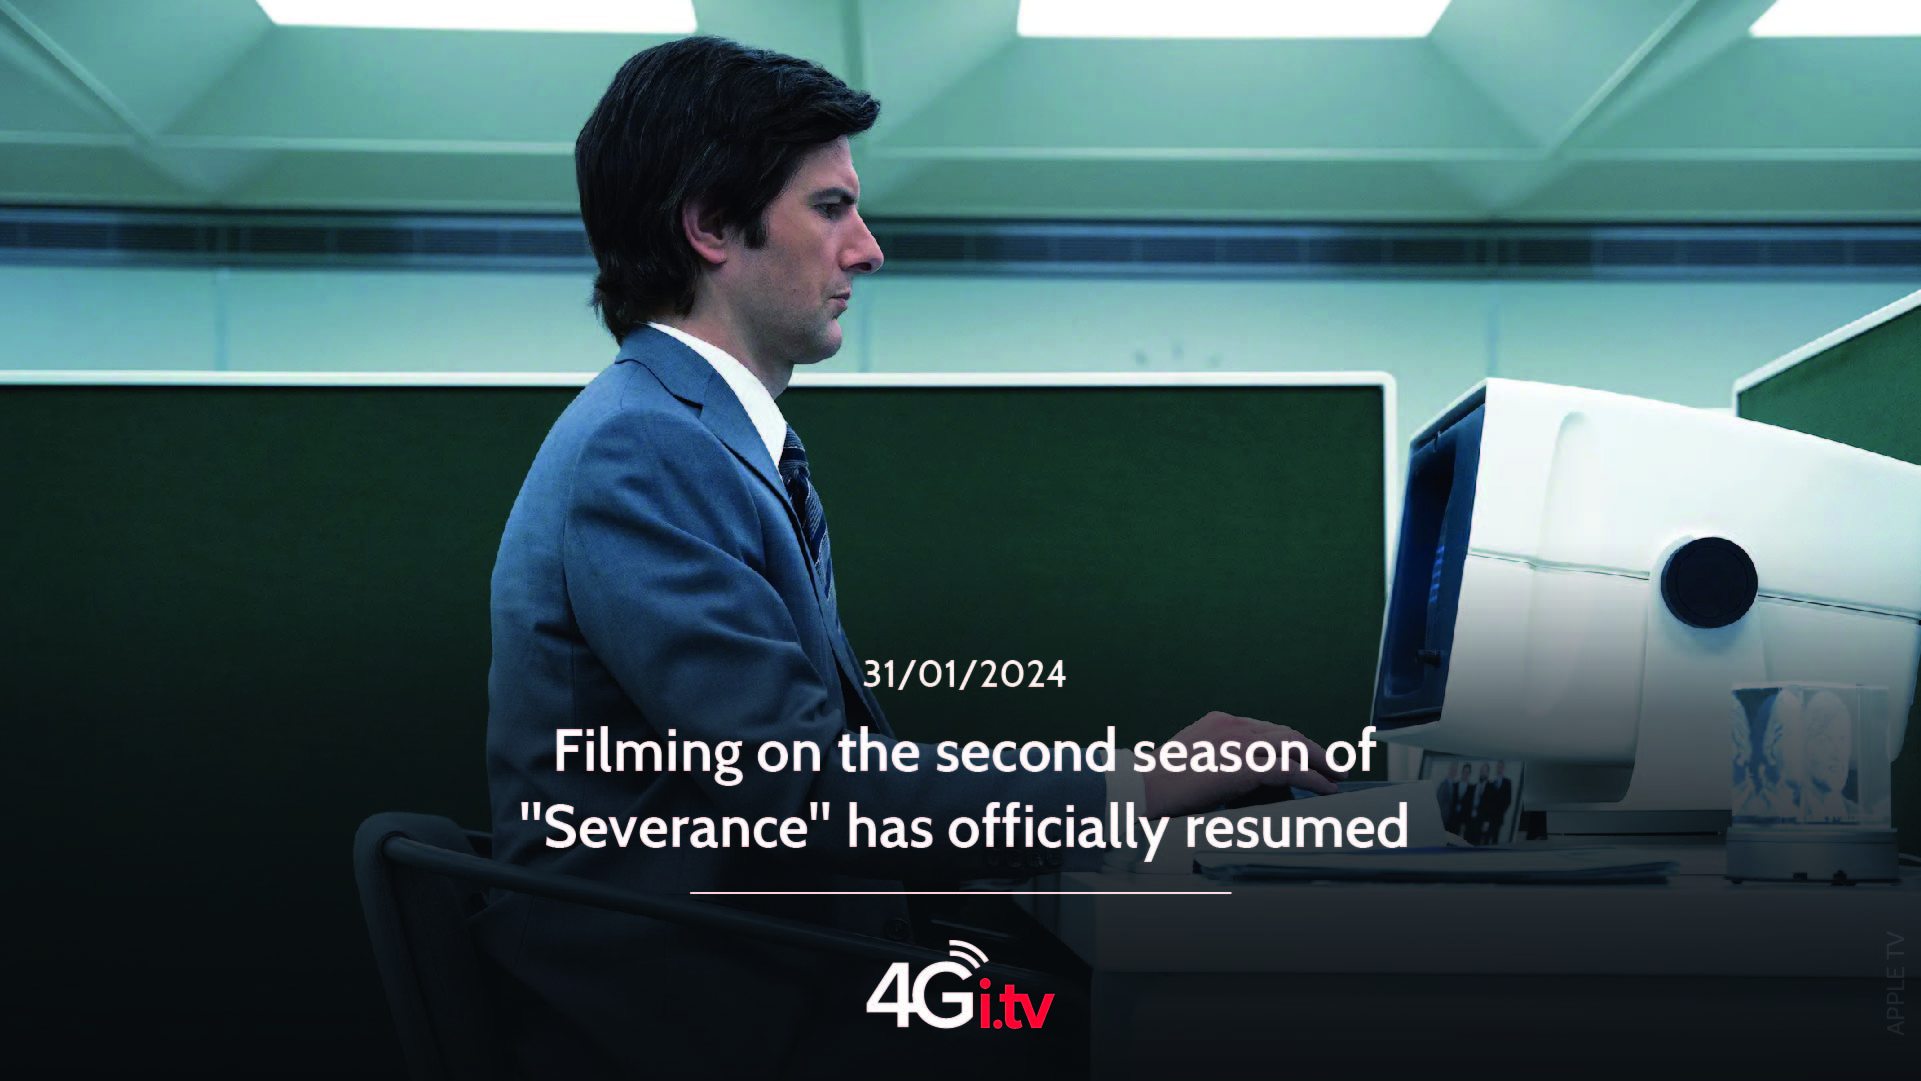 Lesen Sie mehr über den Artikel Filming on the second season of “Severance” has officially resumed